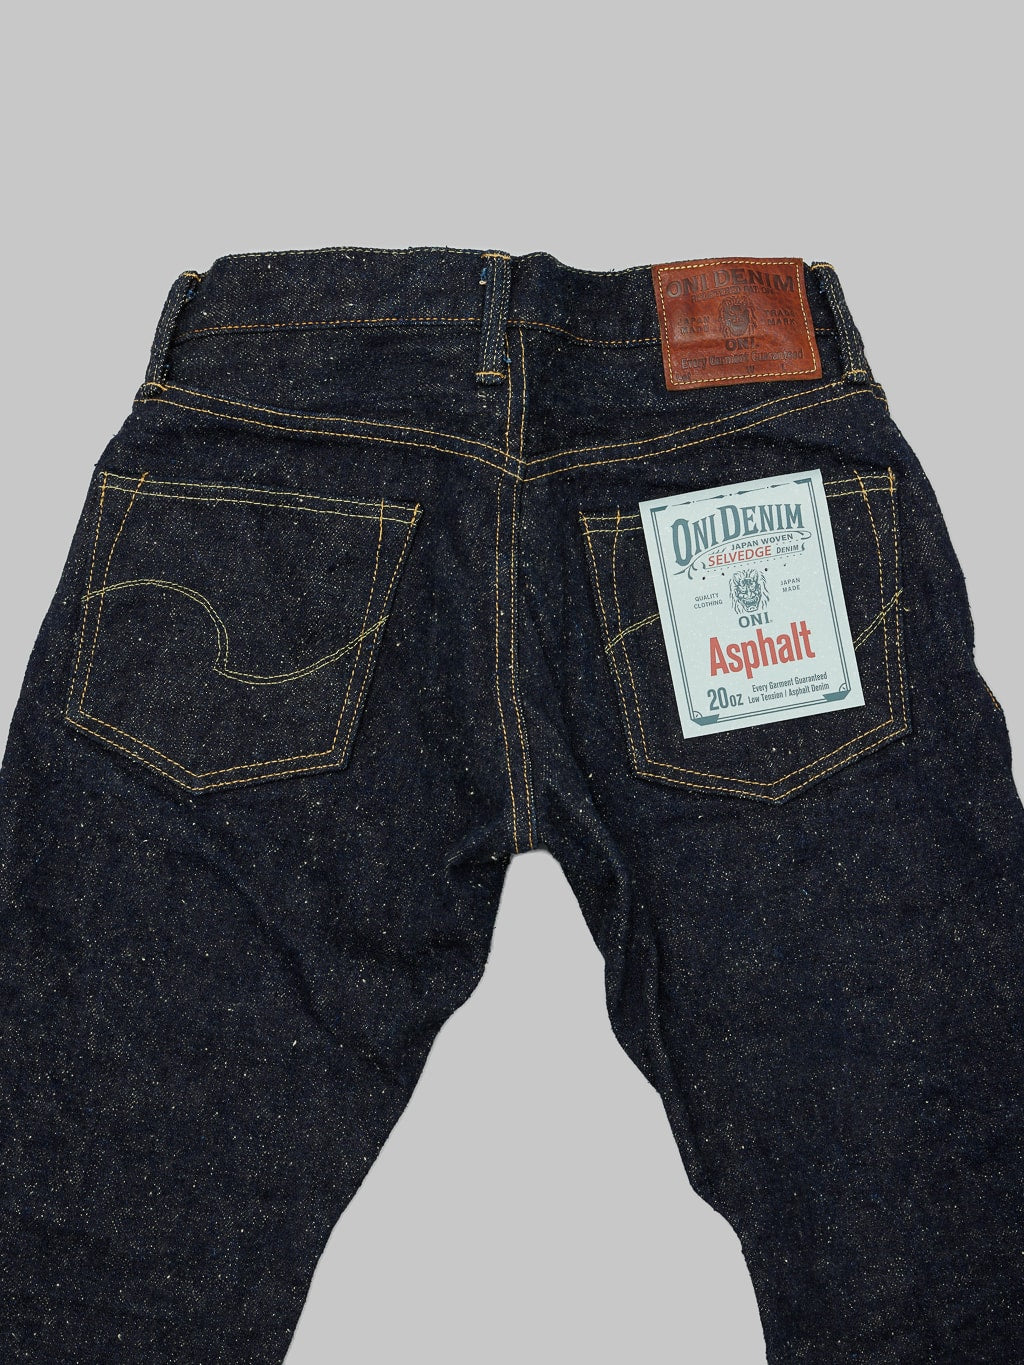 ONI Denim 544 Asphalt 20oz Stylish Tapered Jeans back pockets